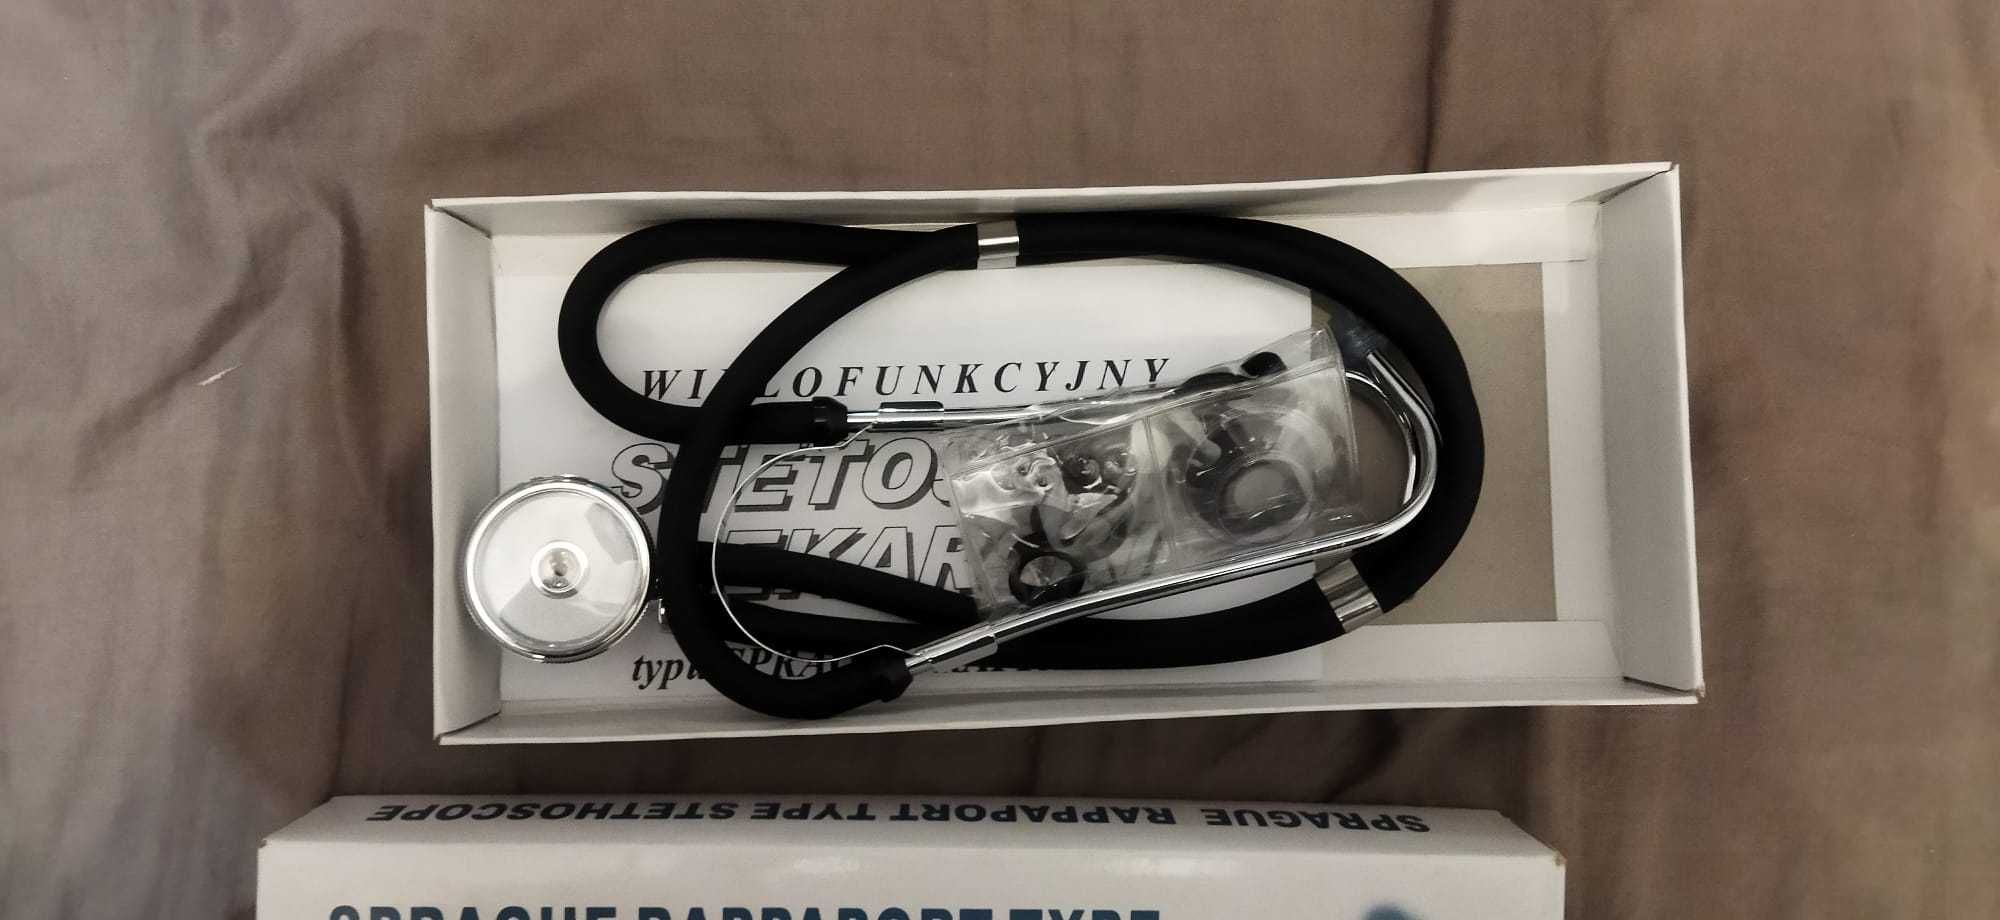 Stetoskop Rappaport